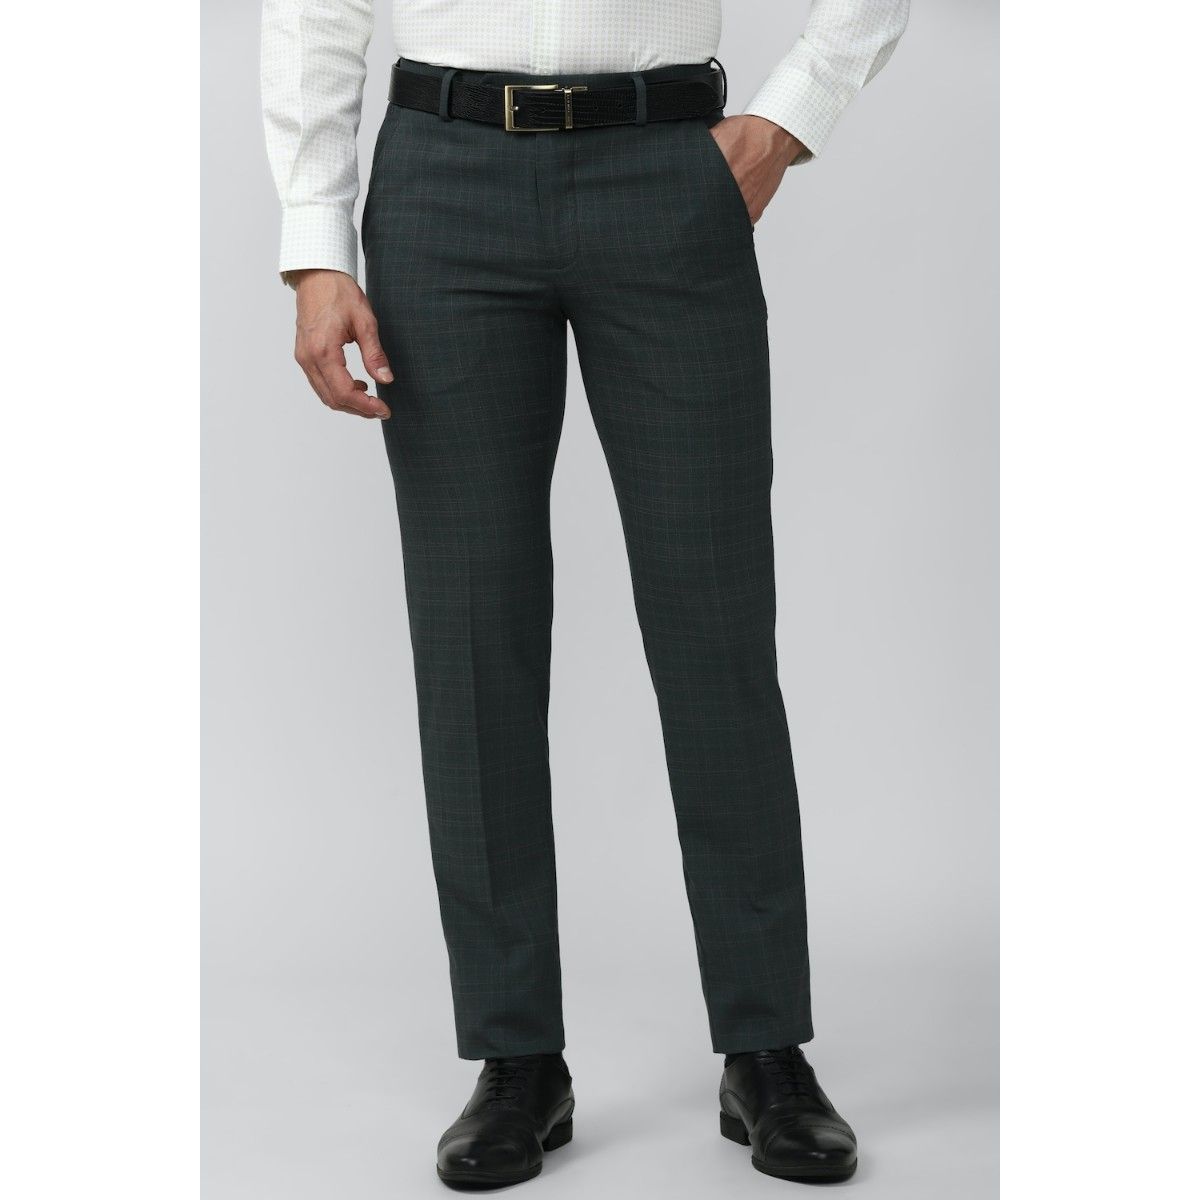 PETER ENGLAND Slim Fit Men Black Trousers - Buy PETER ENGLAND Slim Fit Men  Black Trousers Online at Best Prices in India | Flipkart.com